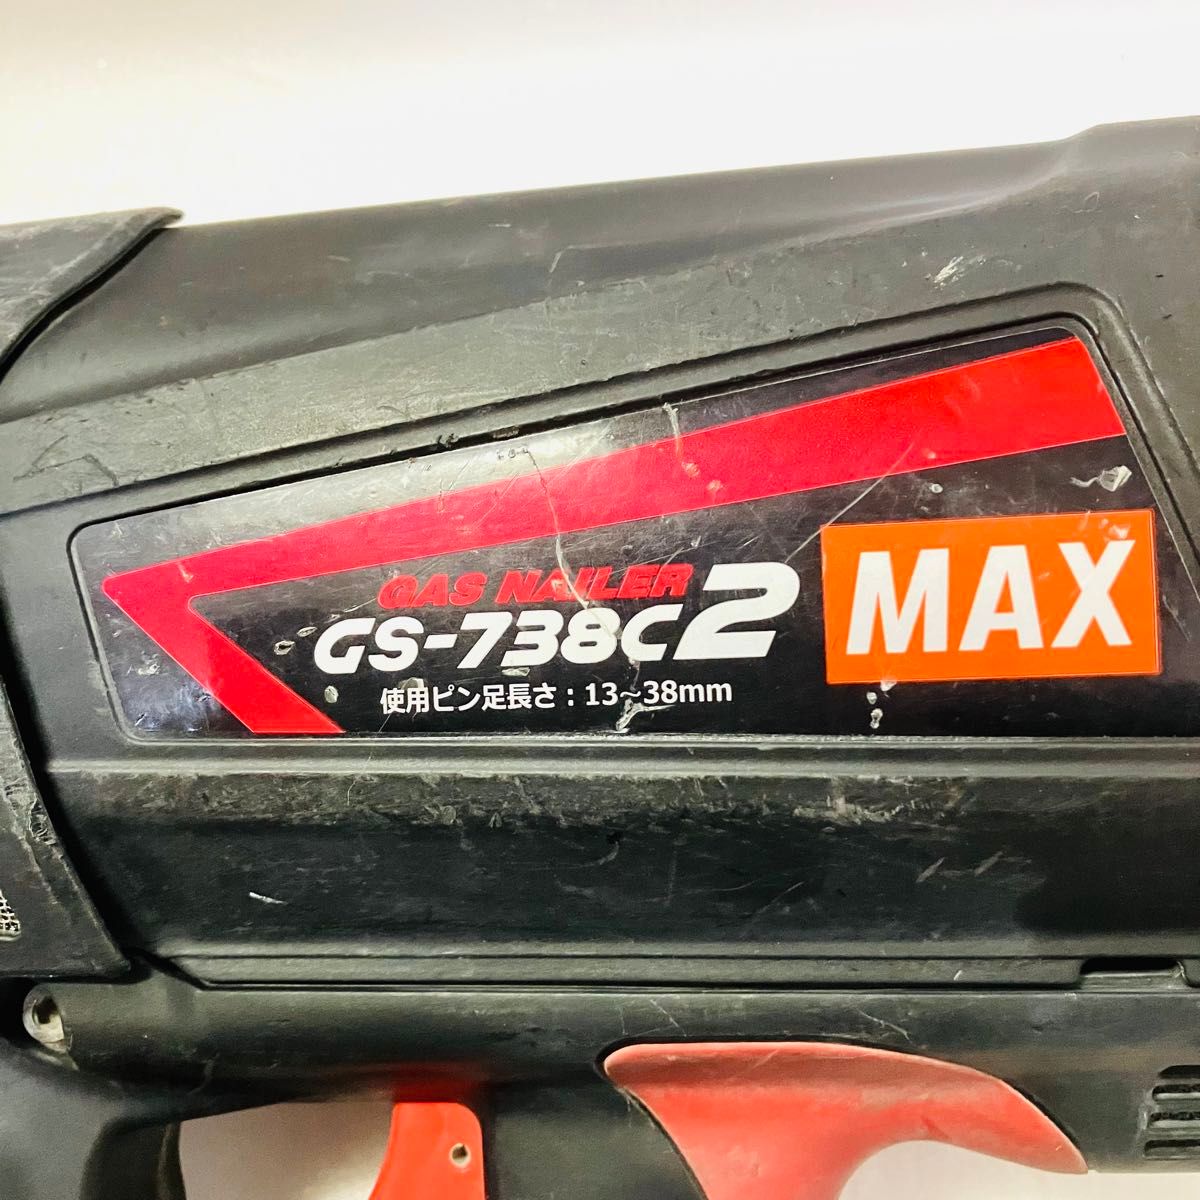 MAX マックス GS-738C2 ピン打ち機 ピン打機 ガスネイラ レッド ブラック 動作品 付属品完備 バッテリー ガス銃